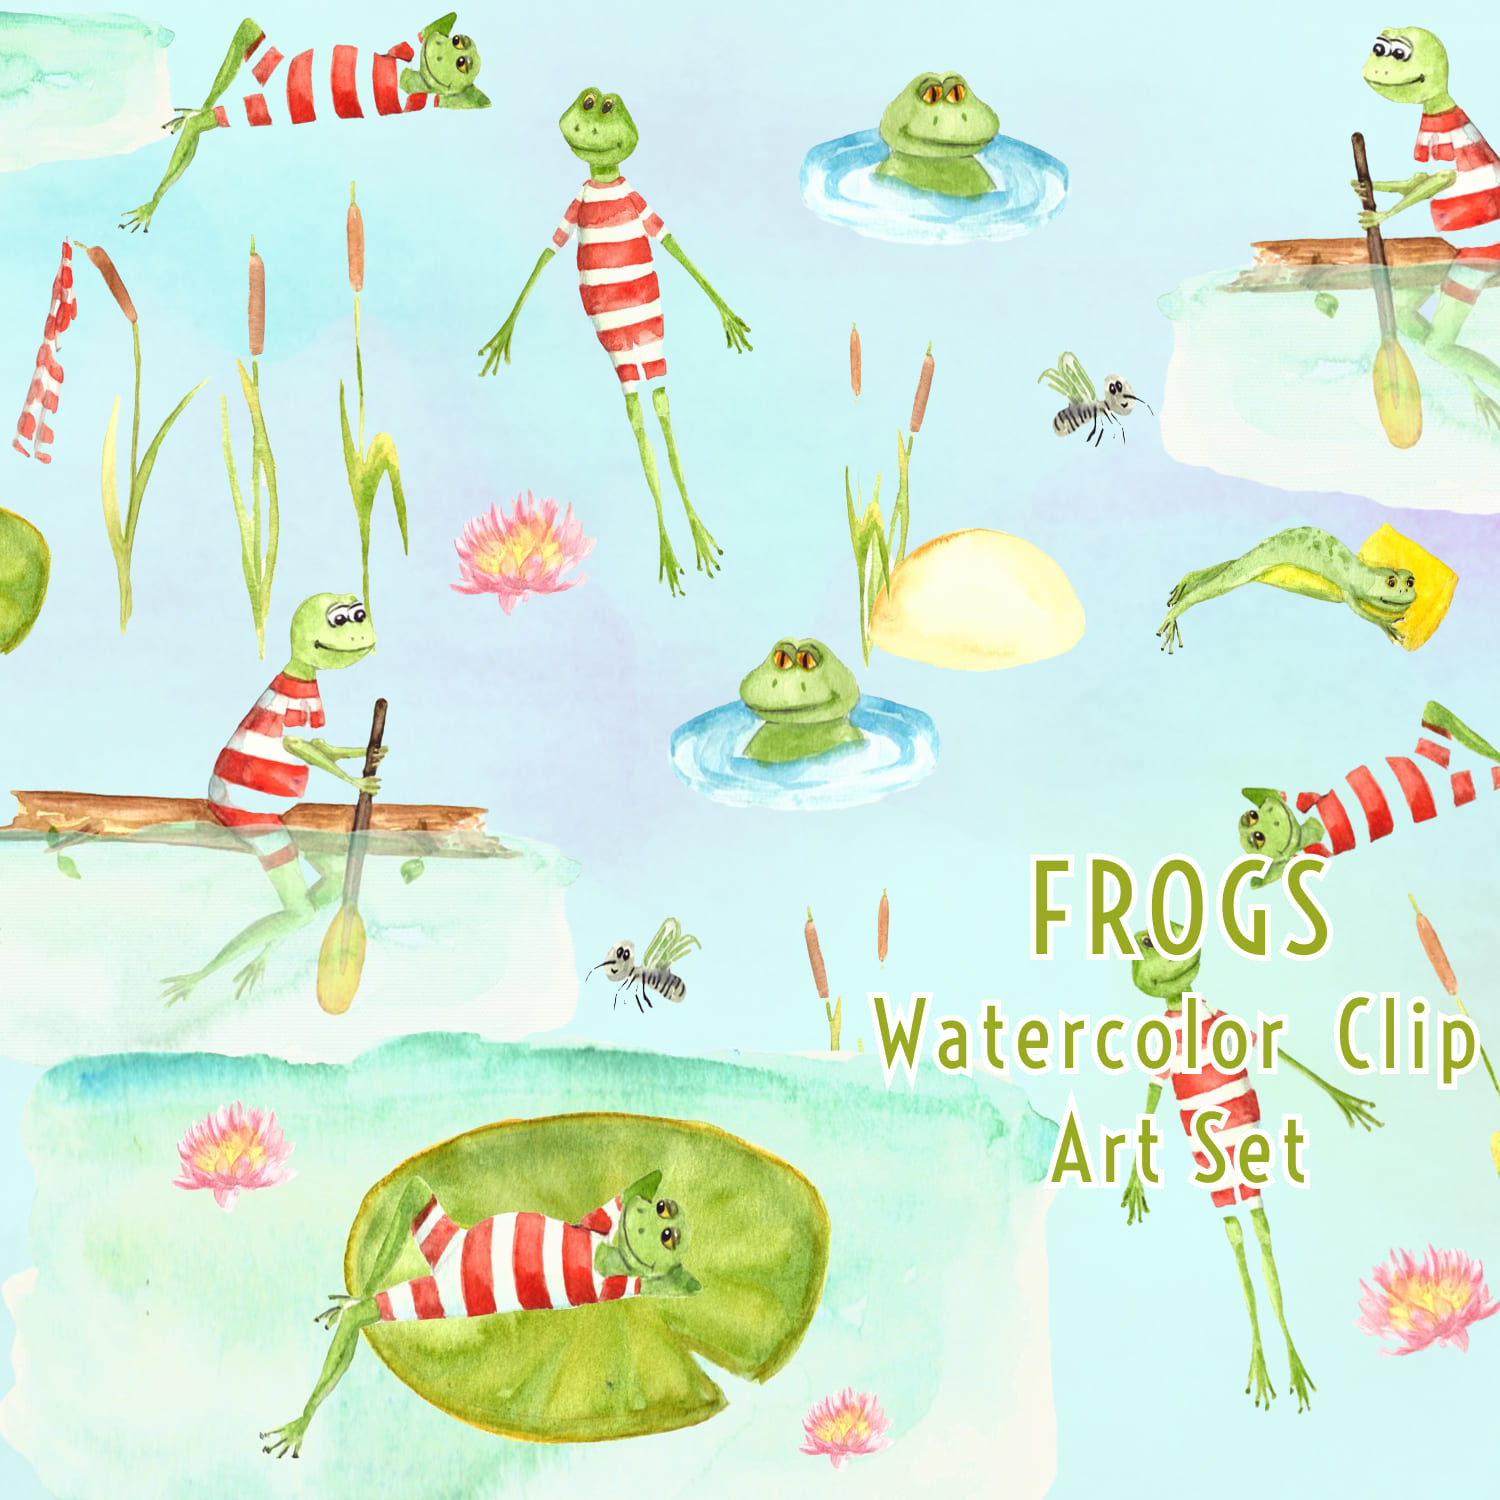 Watercolor Frogs Clip Art Set.